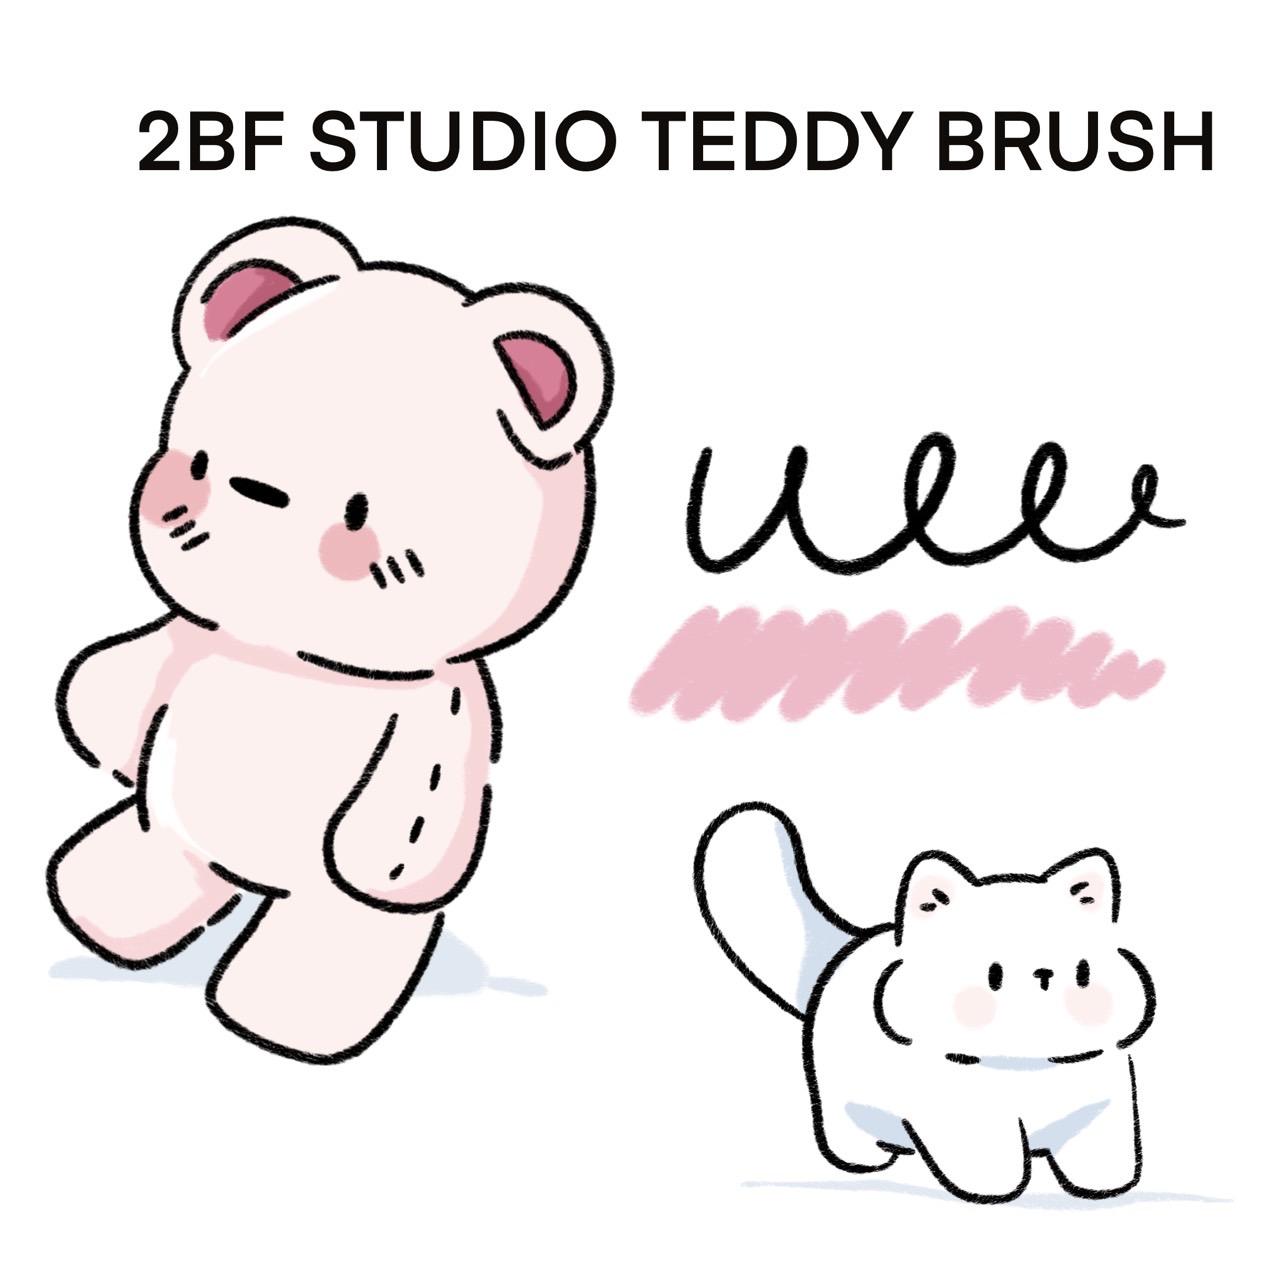 2BF STUDIO TEDDY BRUSH